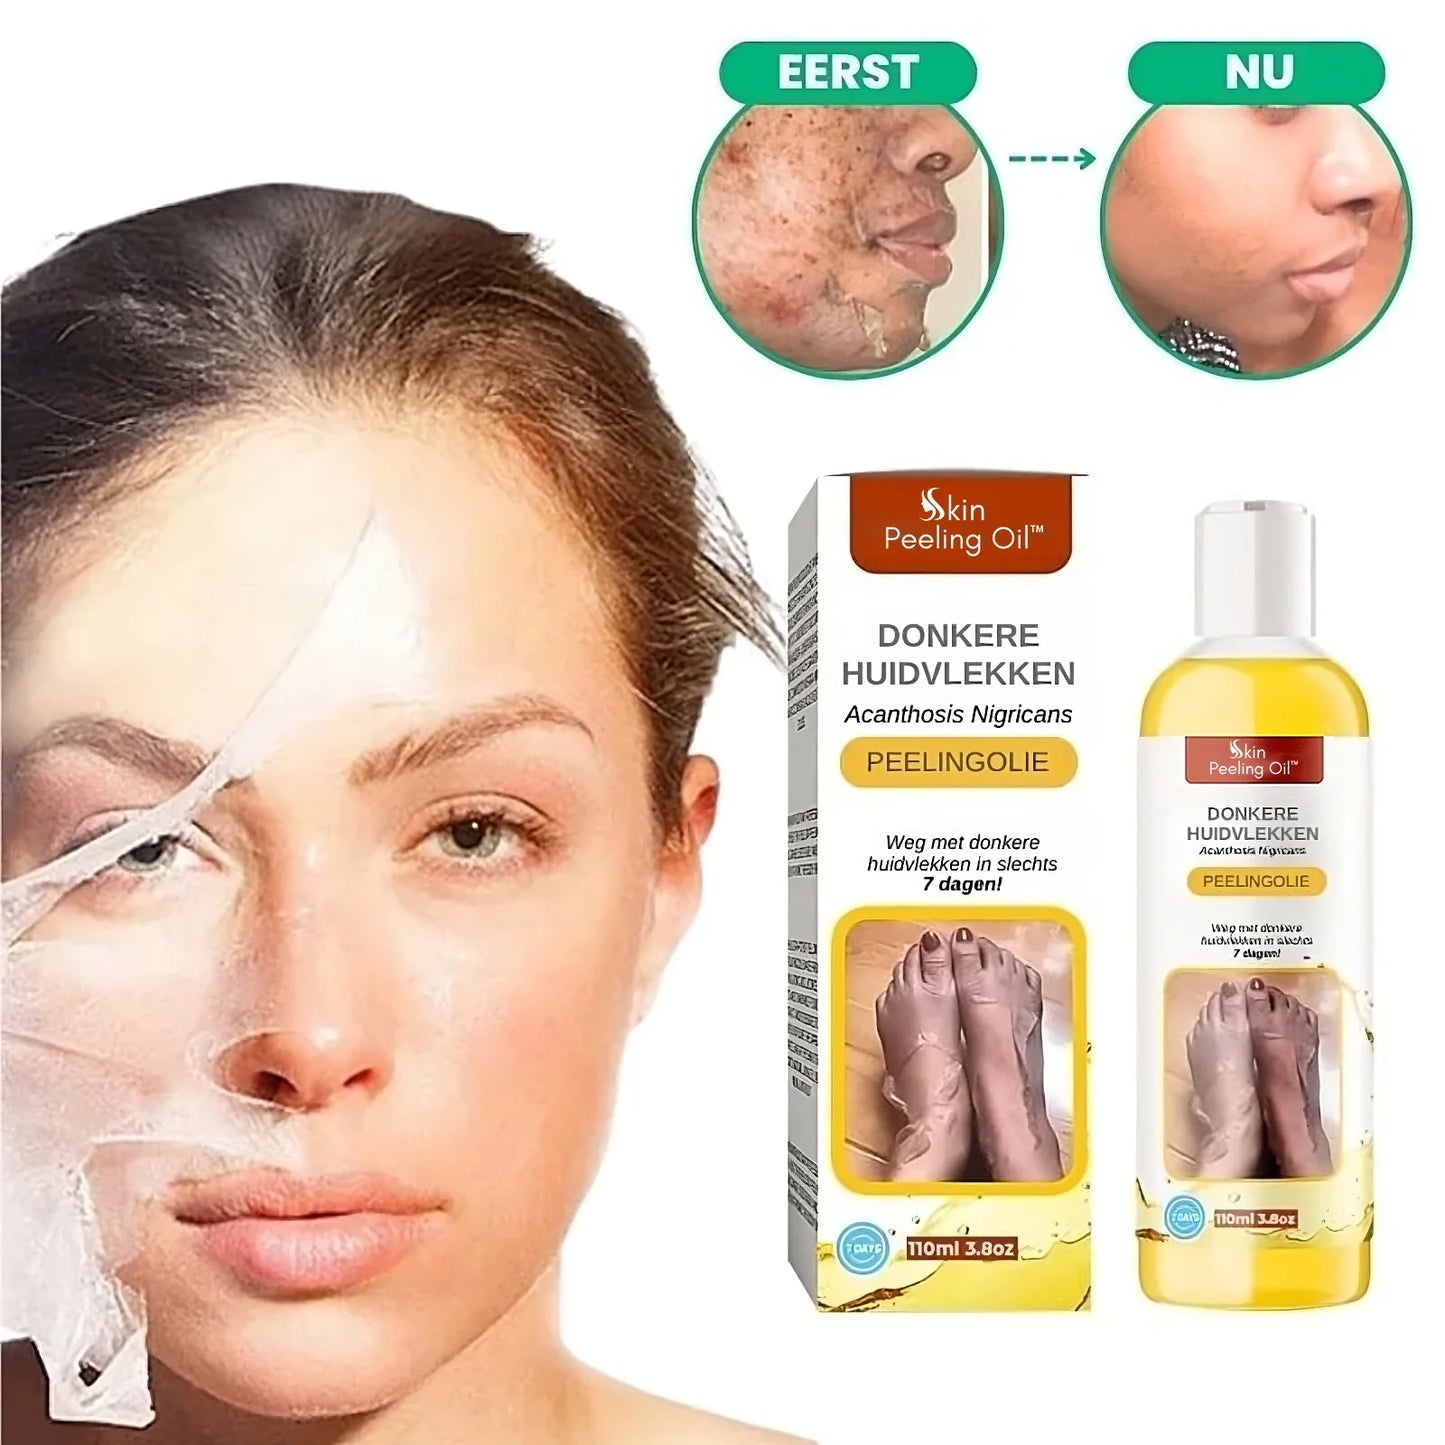 Skin Peeling Oil